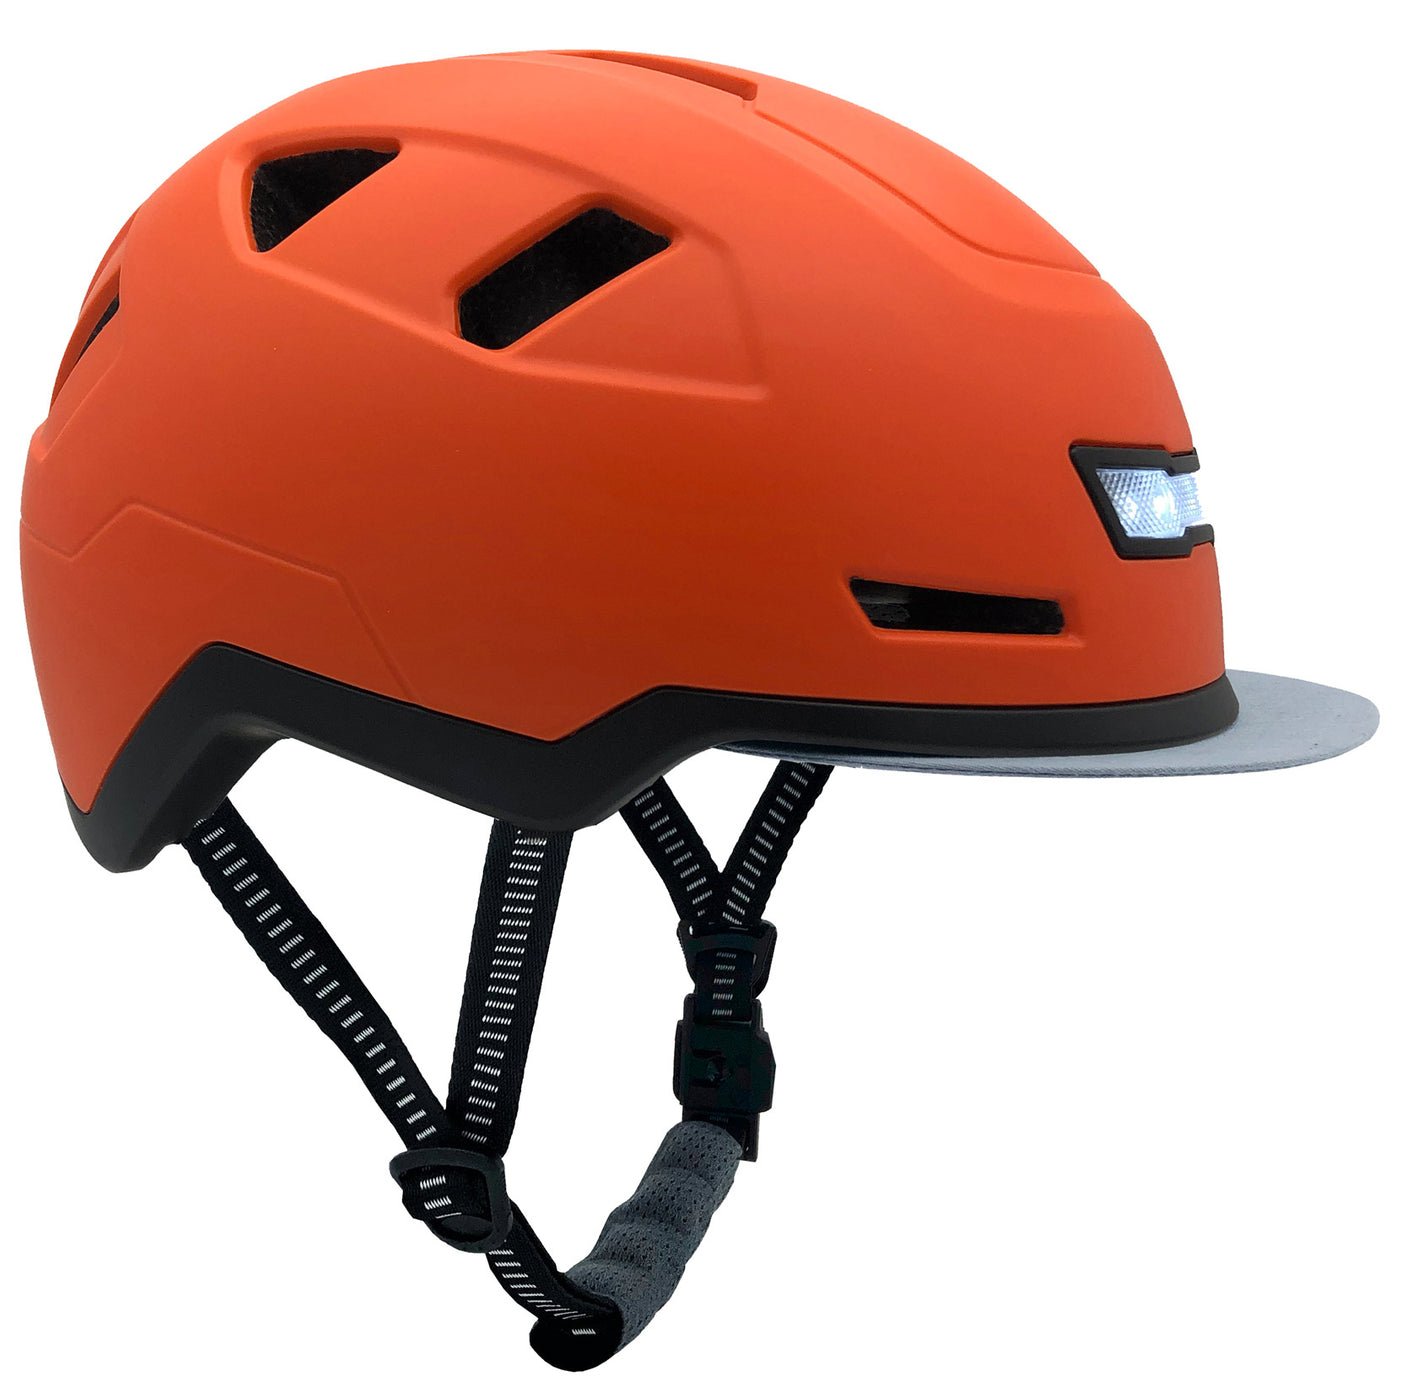 Casco Bici Da Corsa E Bike Capacete Safety Met Helmet Bicycle